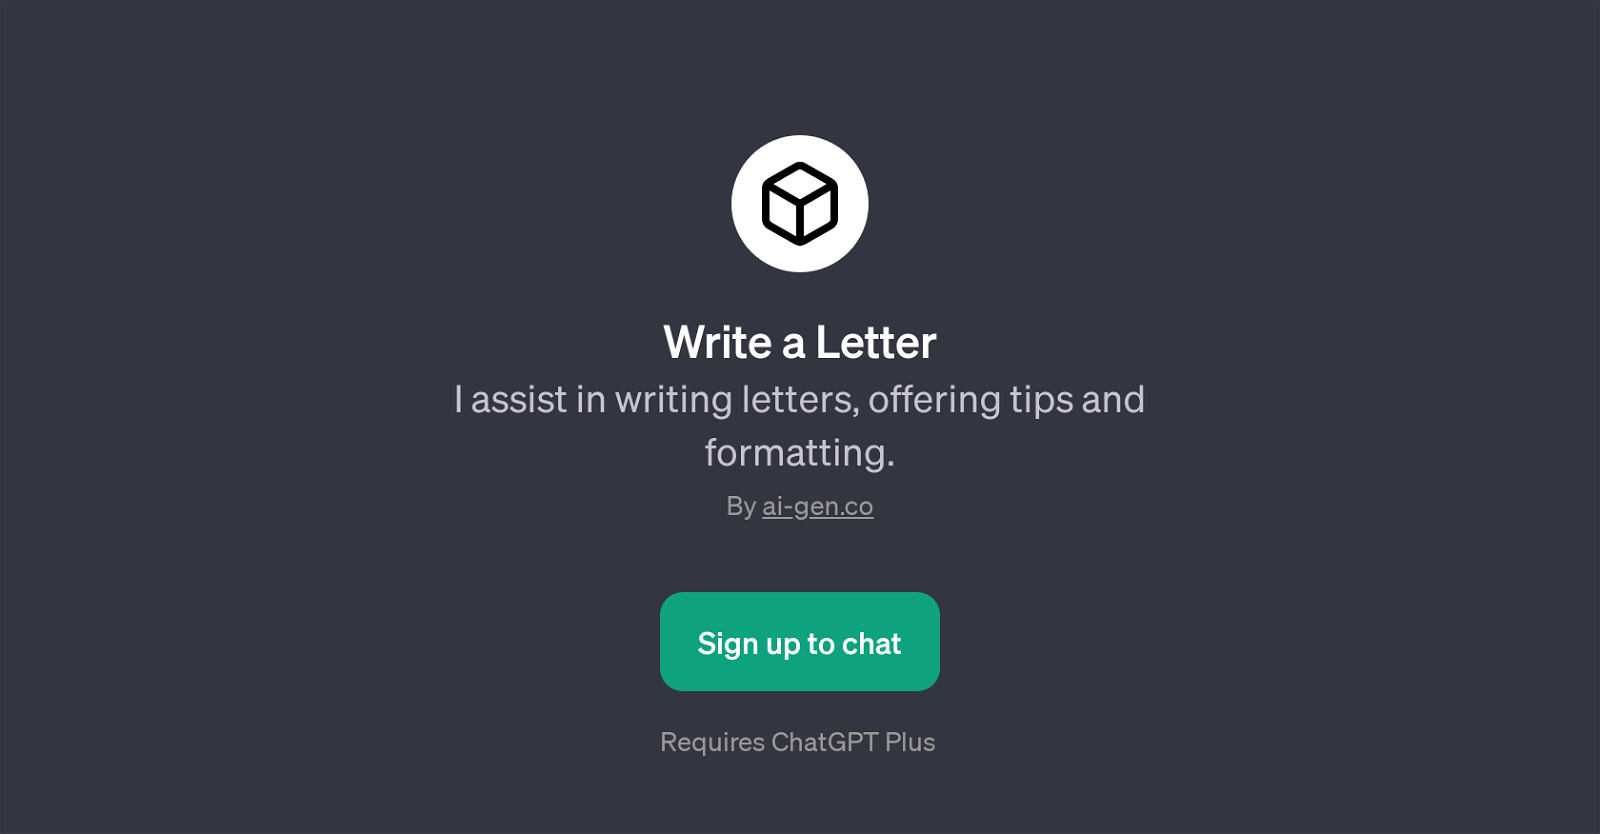 Write a Letter website